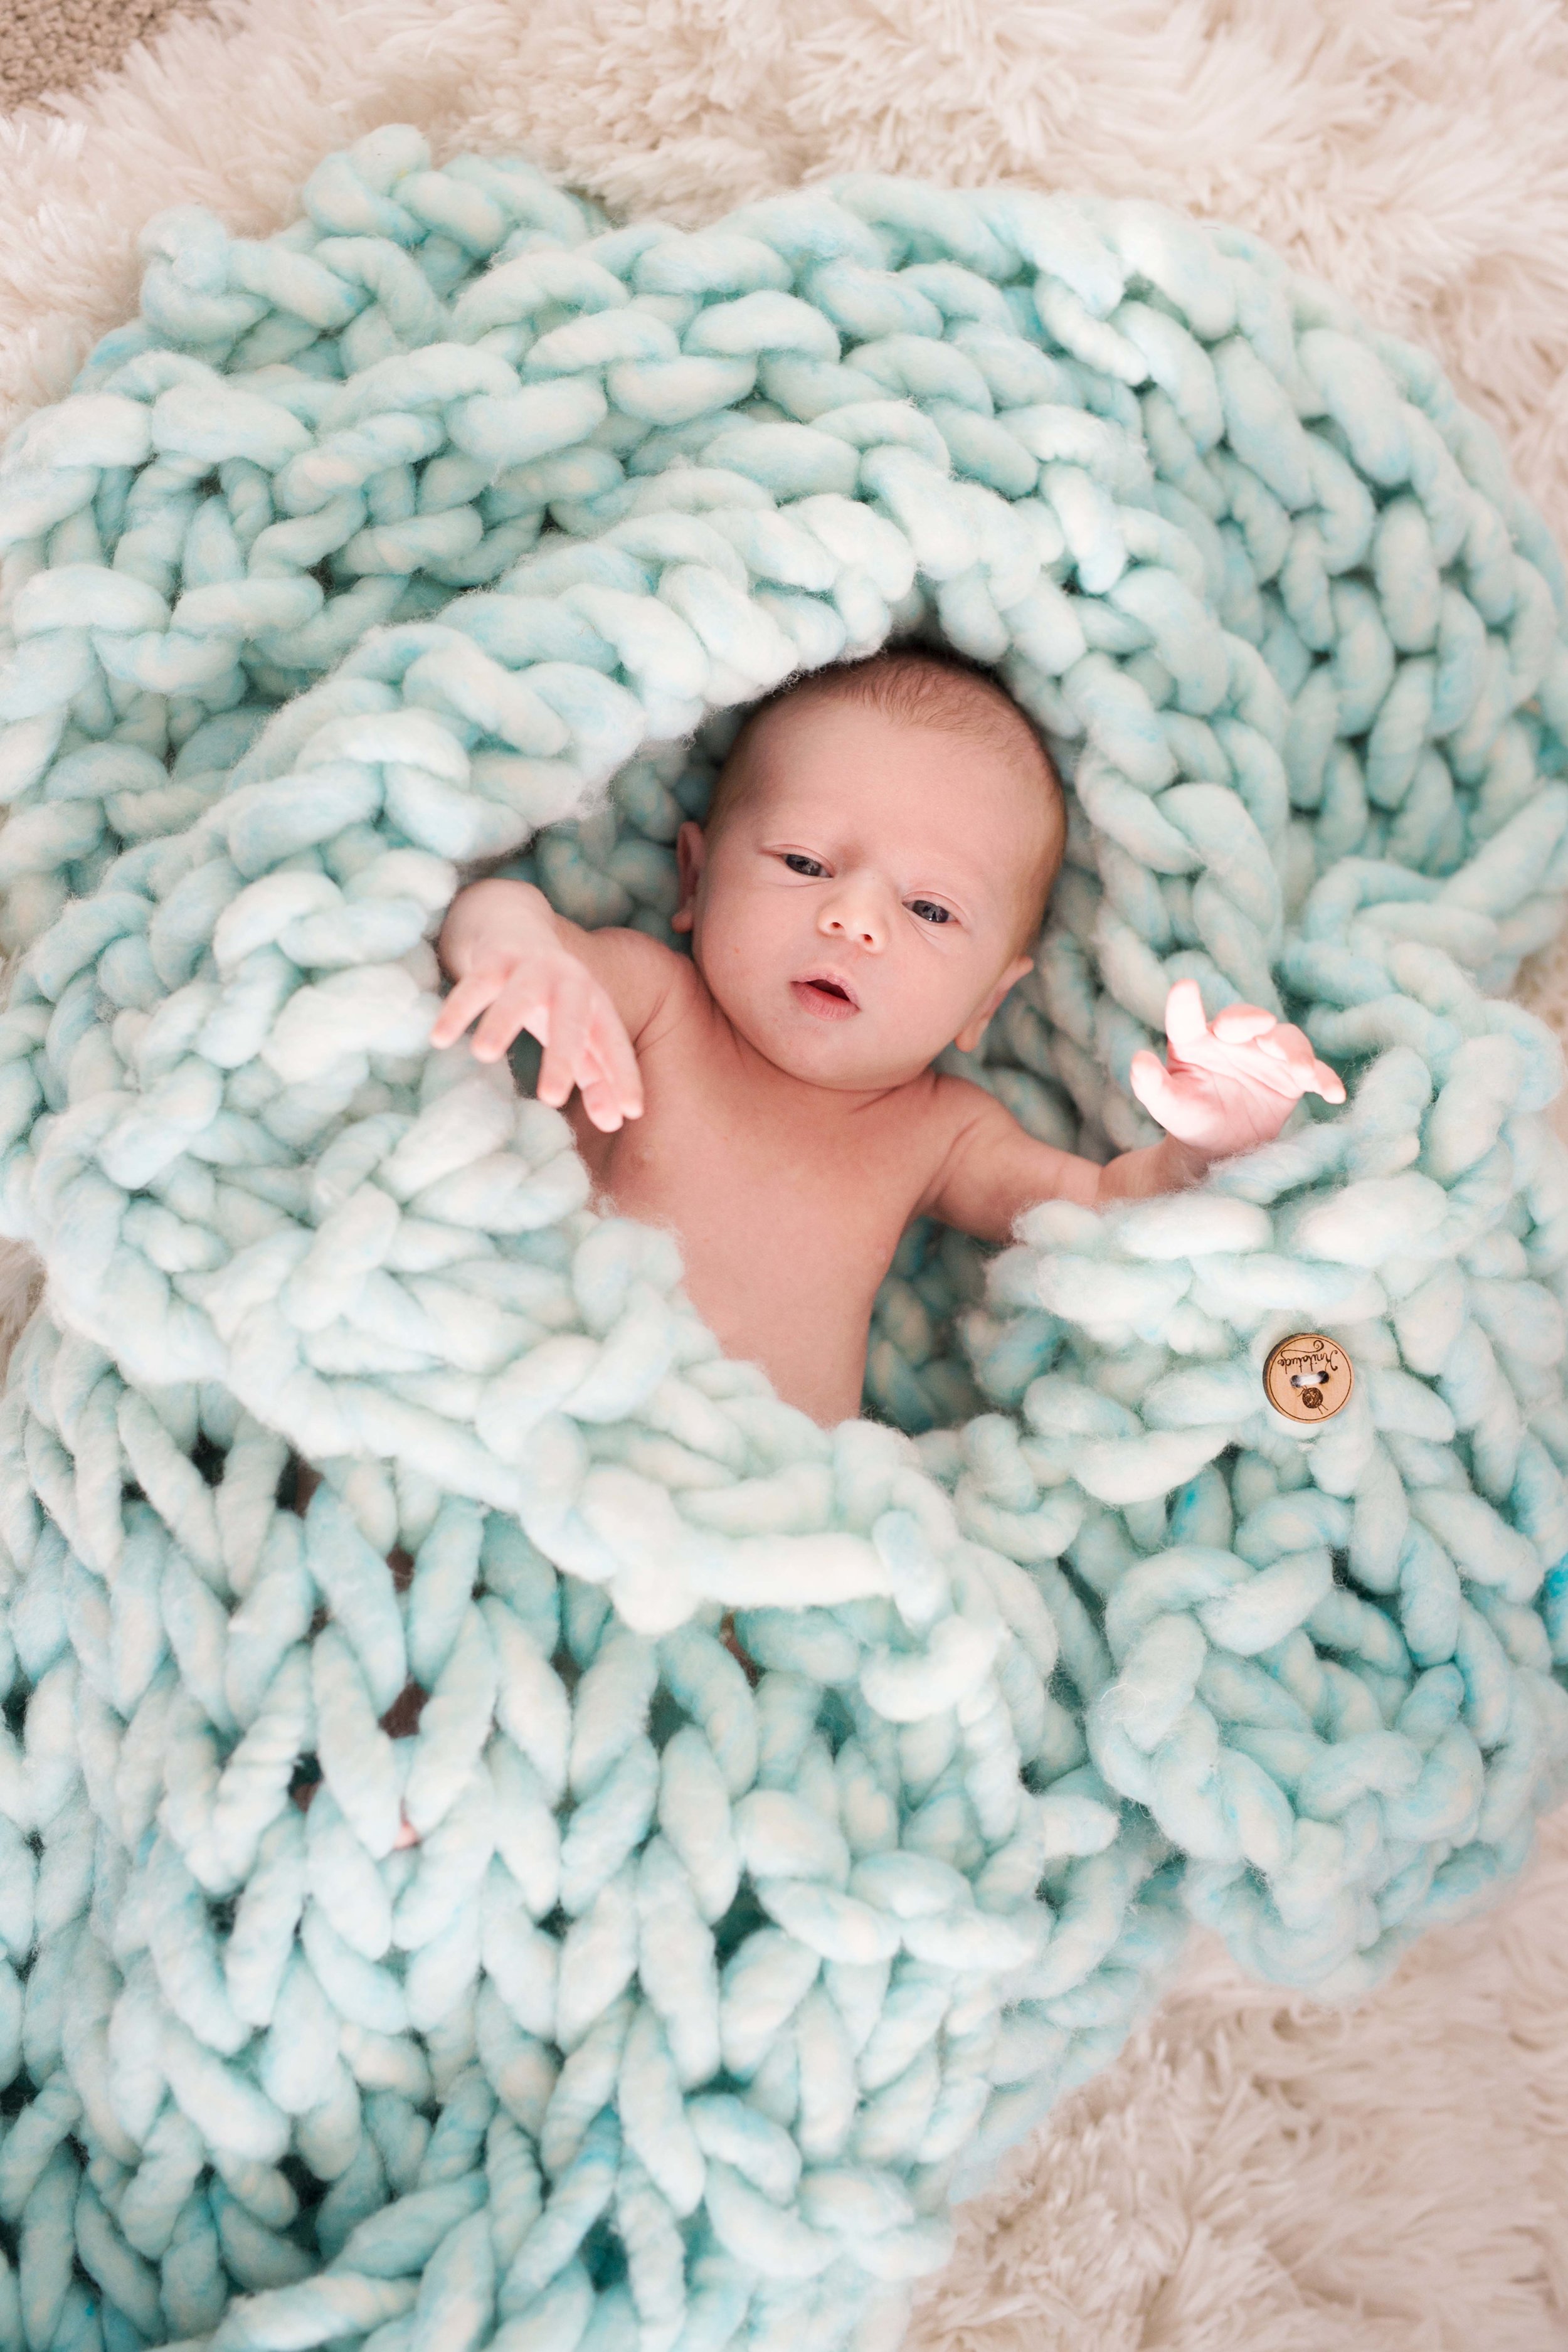 Christy-D-Swanberg-Photography-Calgary-maternity-lifestyle-portraits-family-newborn-baby-11.jpg